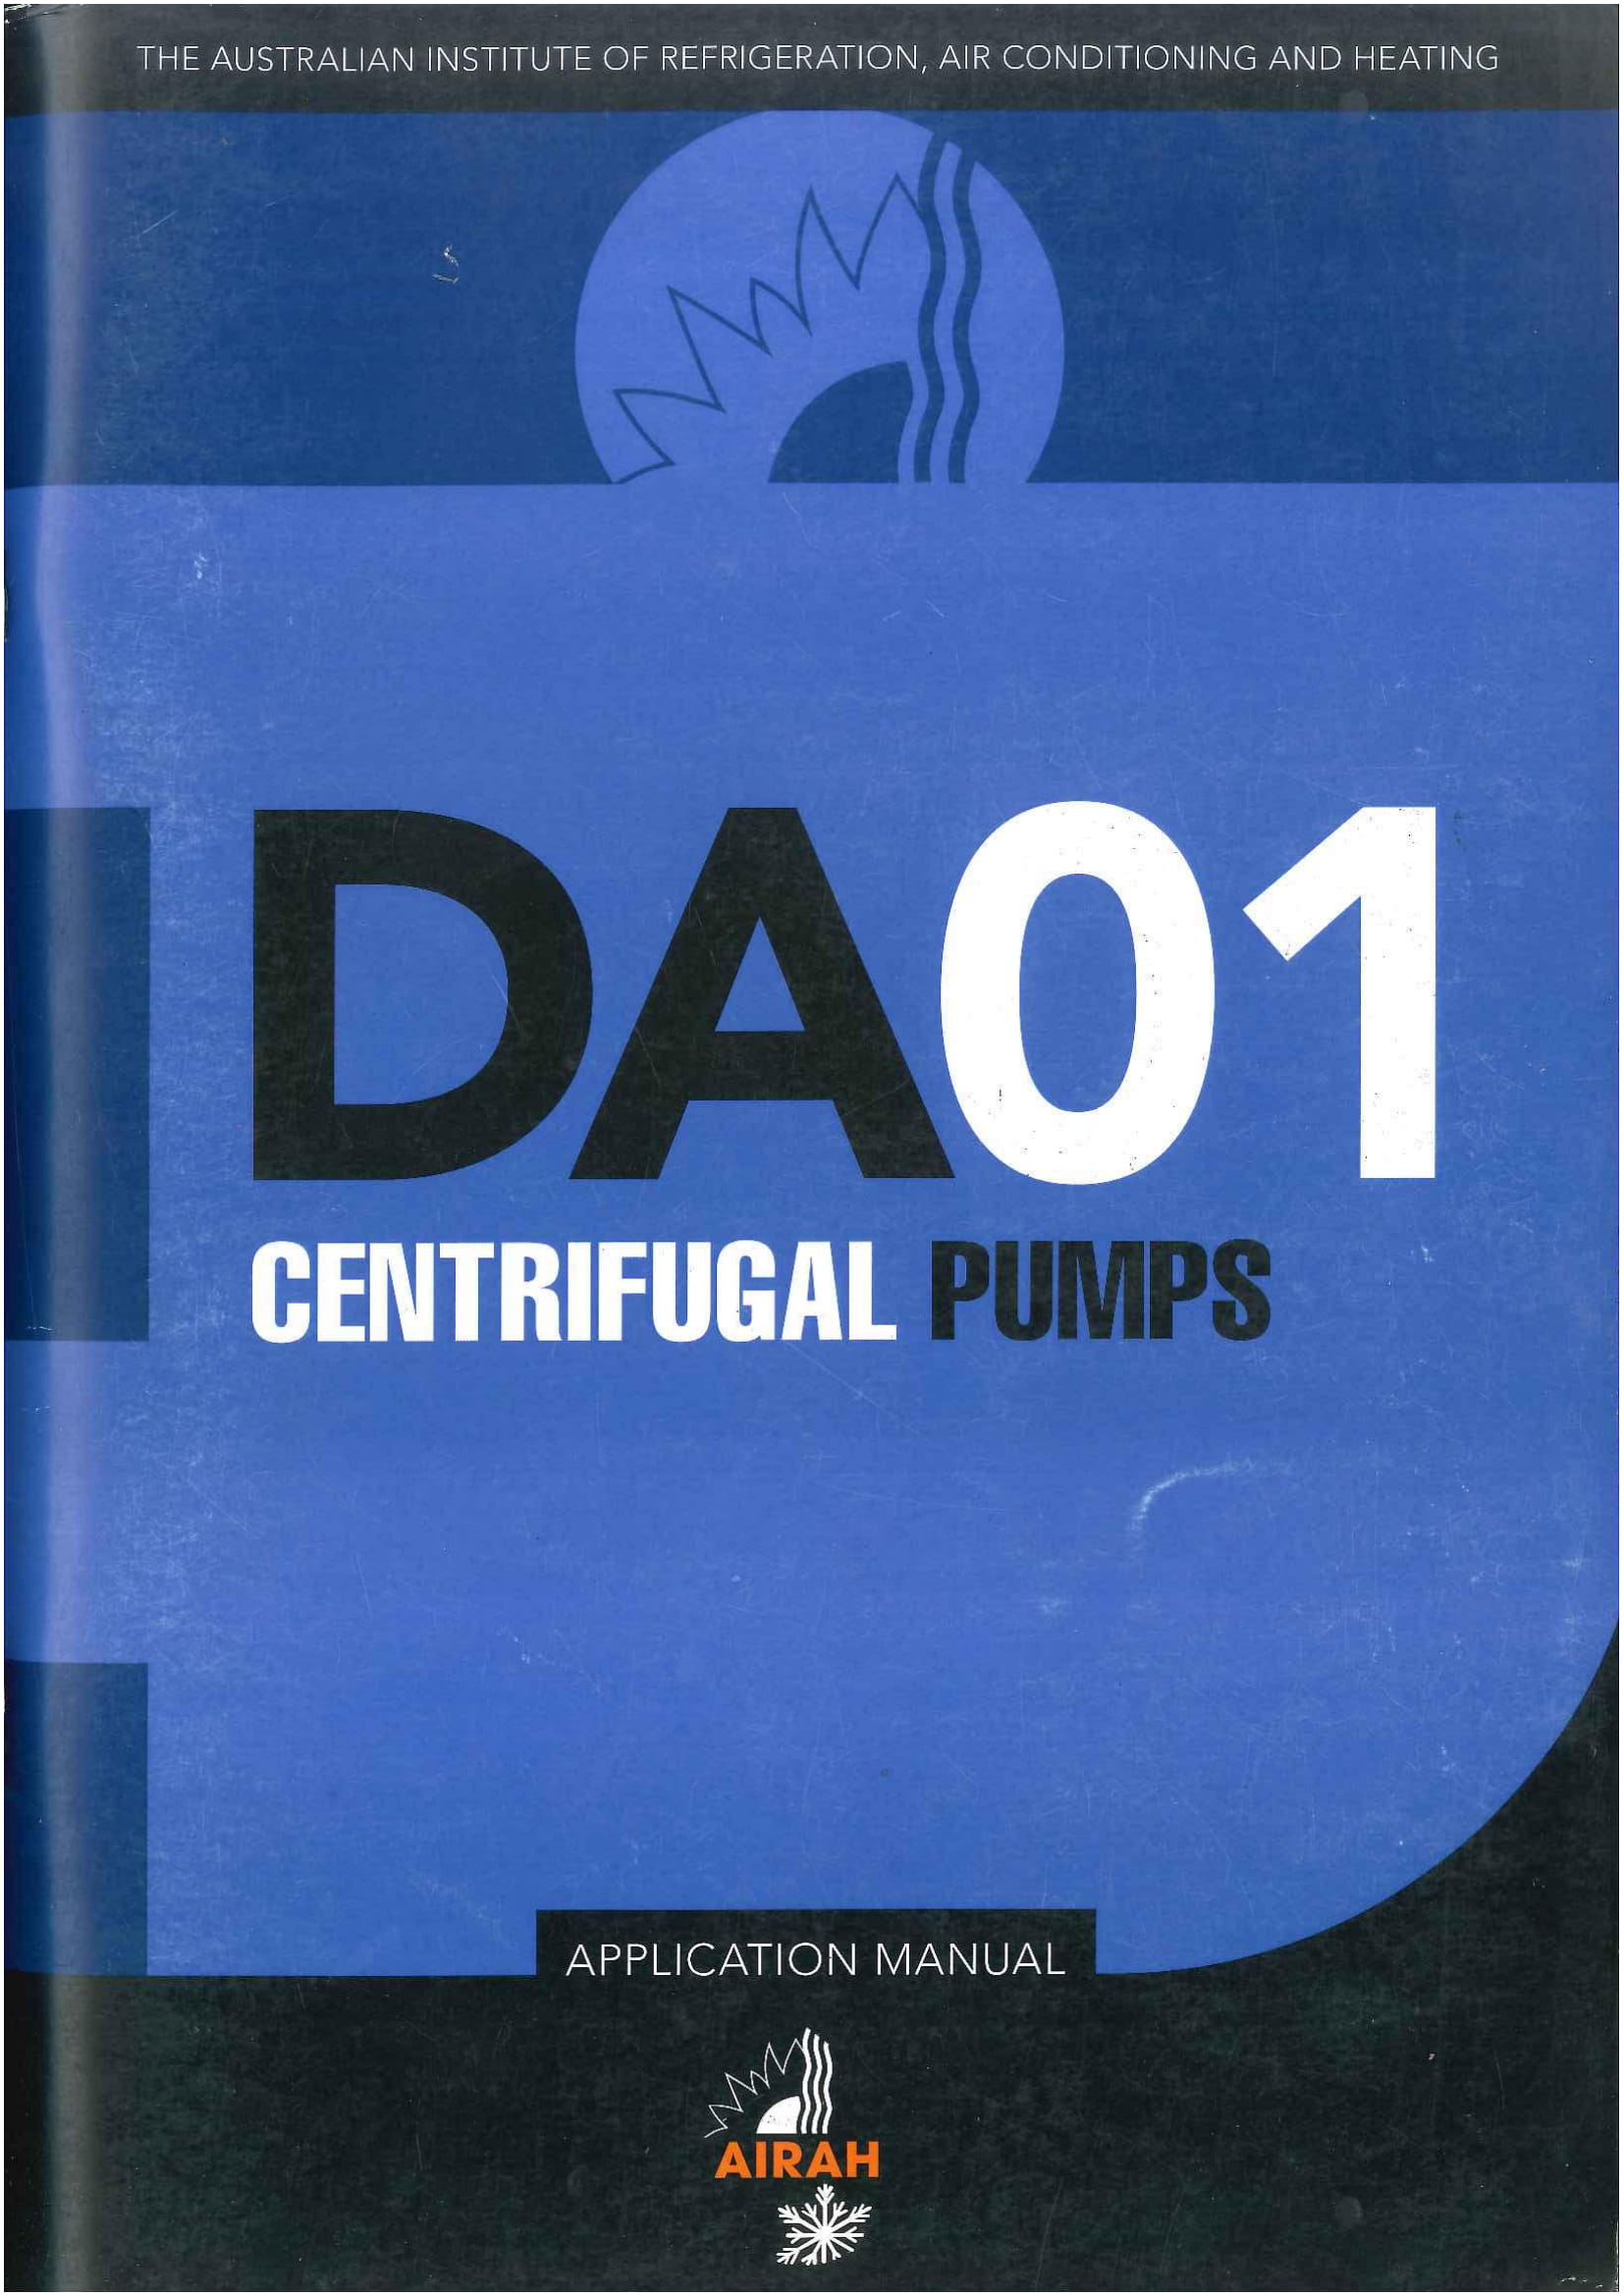 DA01 Centrifugal pumps